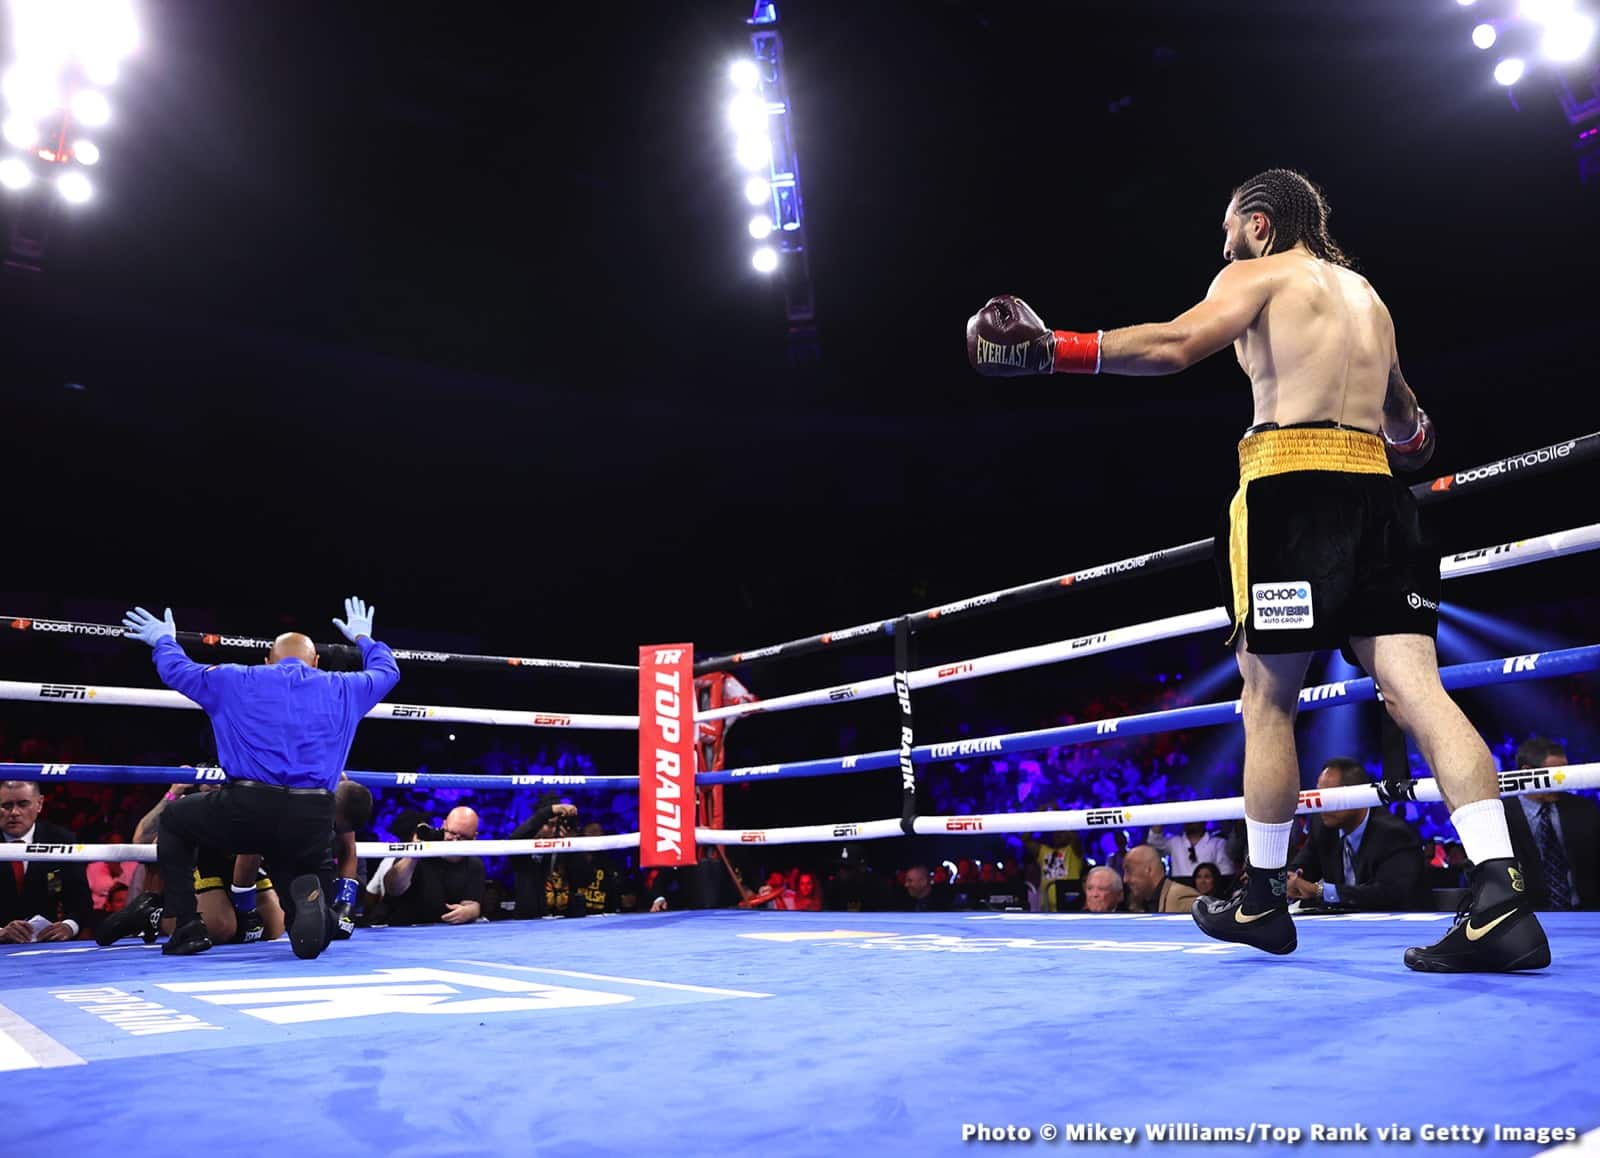 Emanuel Navarrete Knocks Out Eduardo Baez - Boxing Results